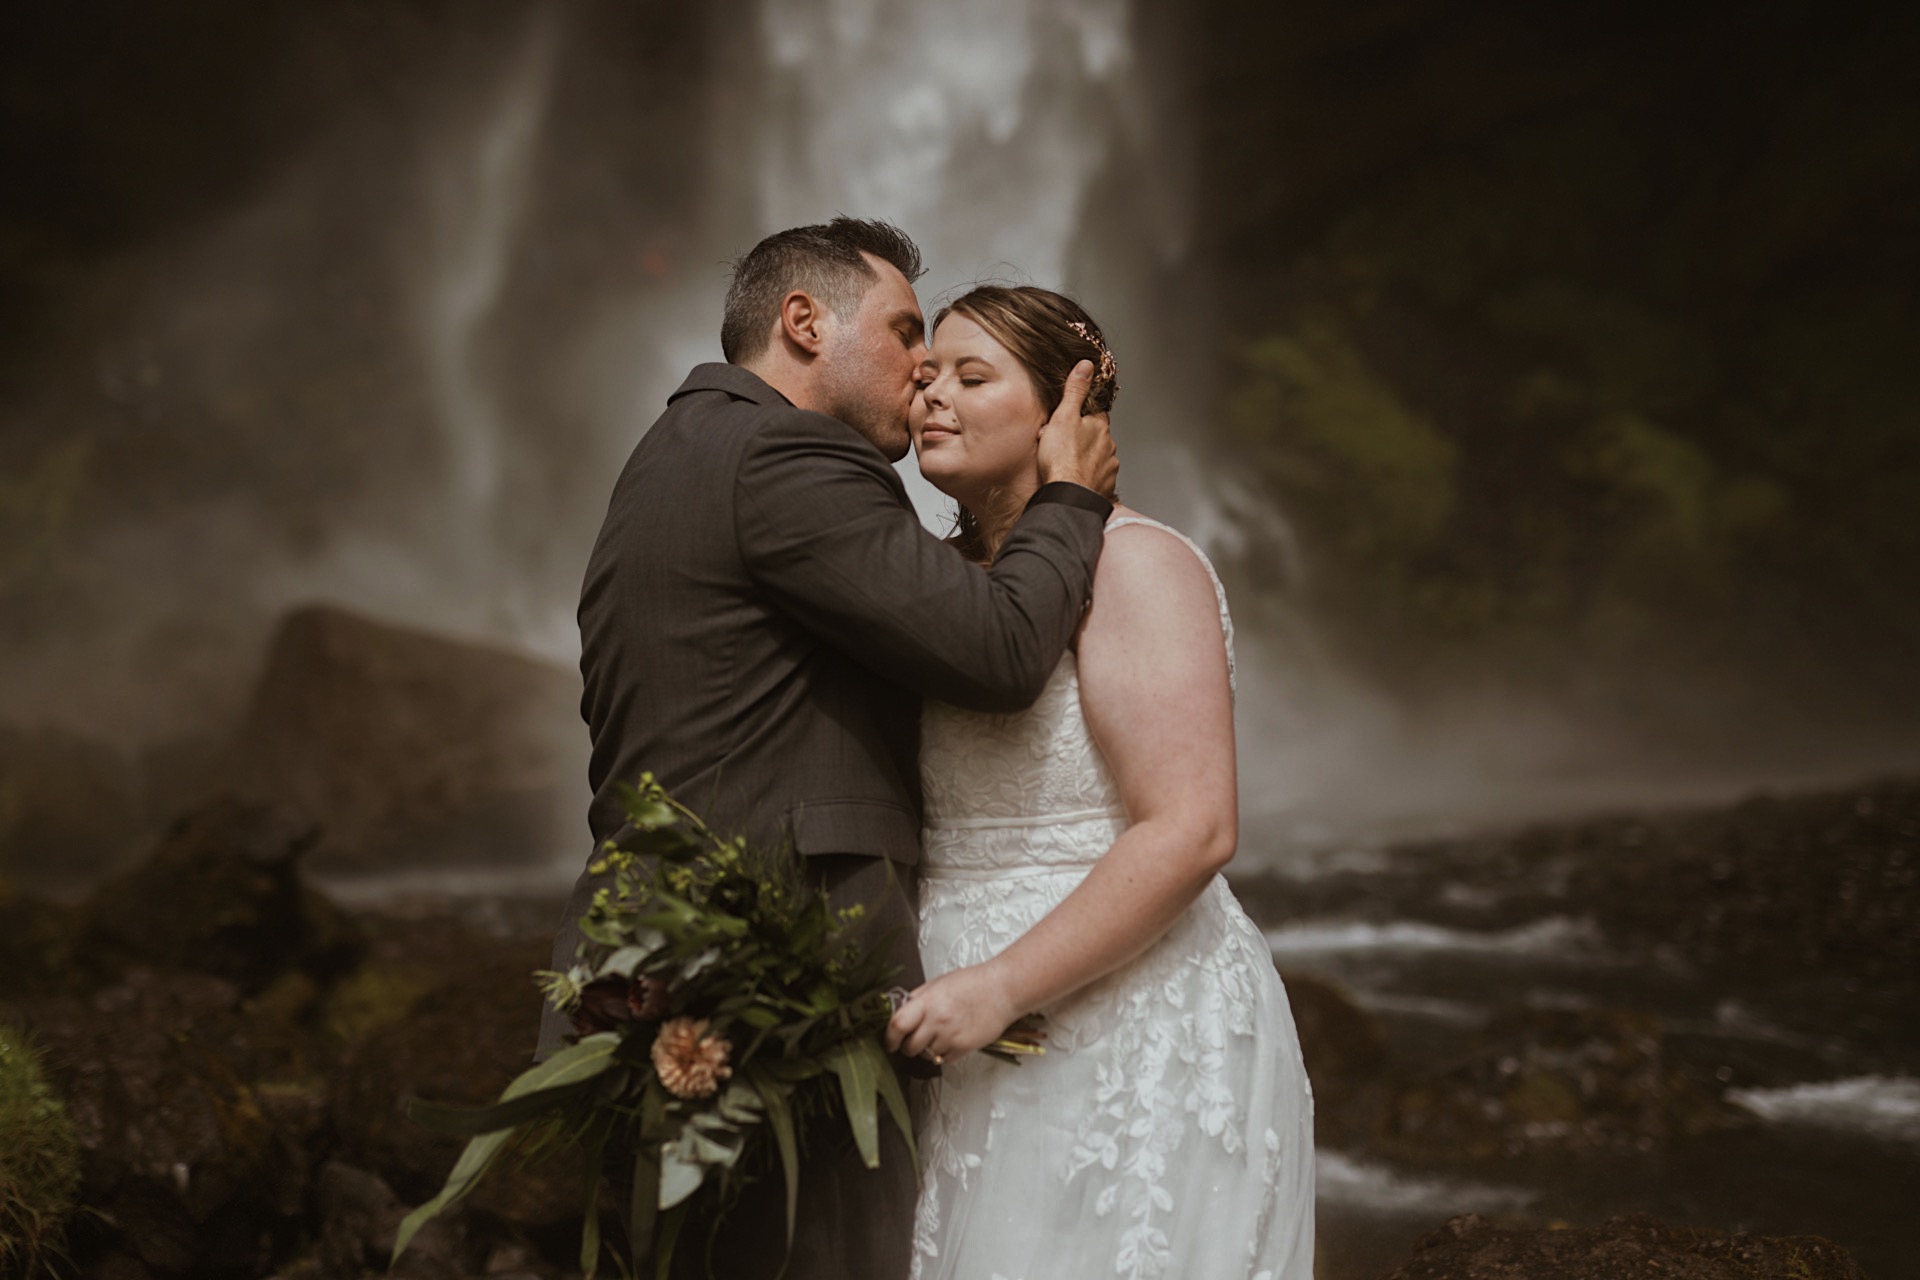 Abigail's Dramatic Iceland Wedding - Strut Bridal Salon